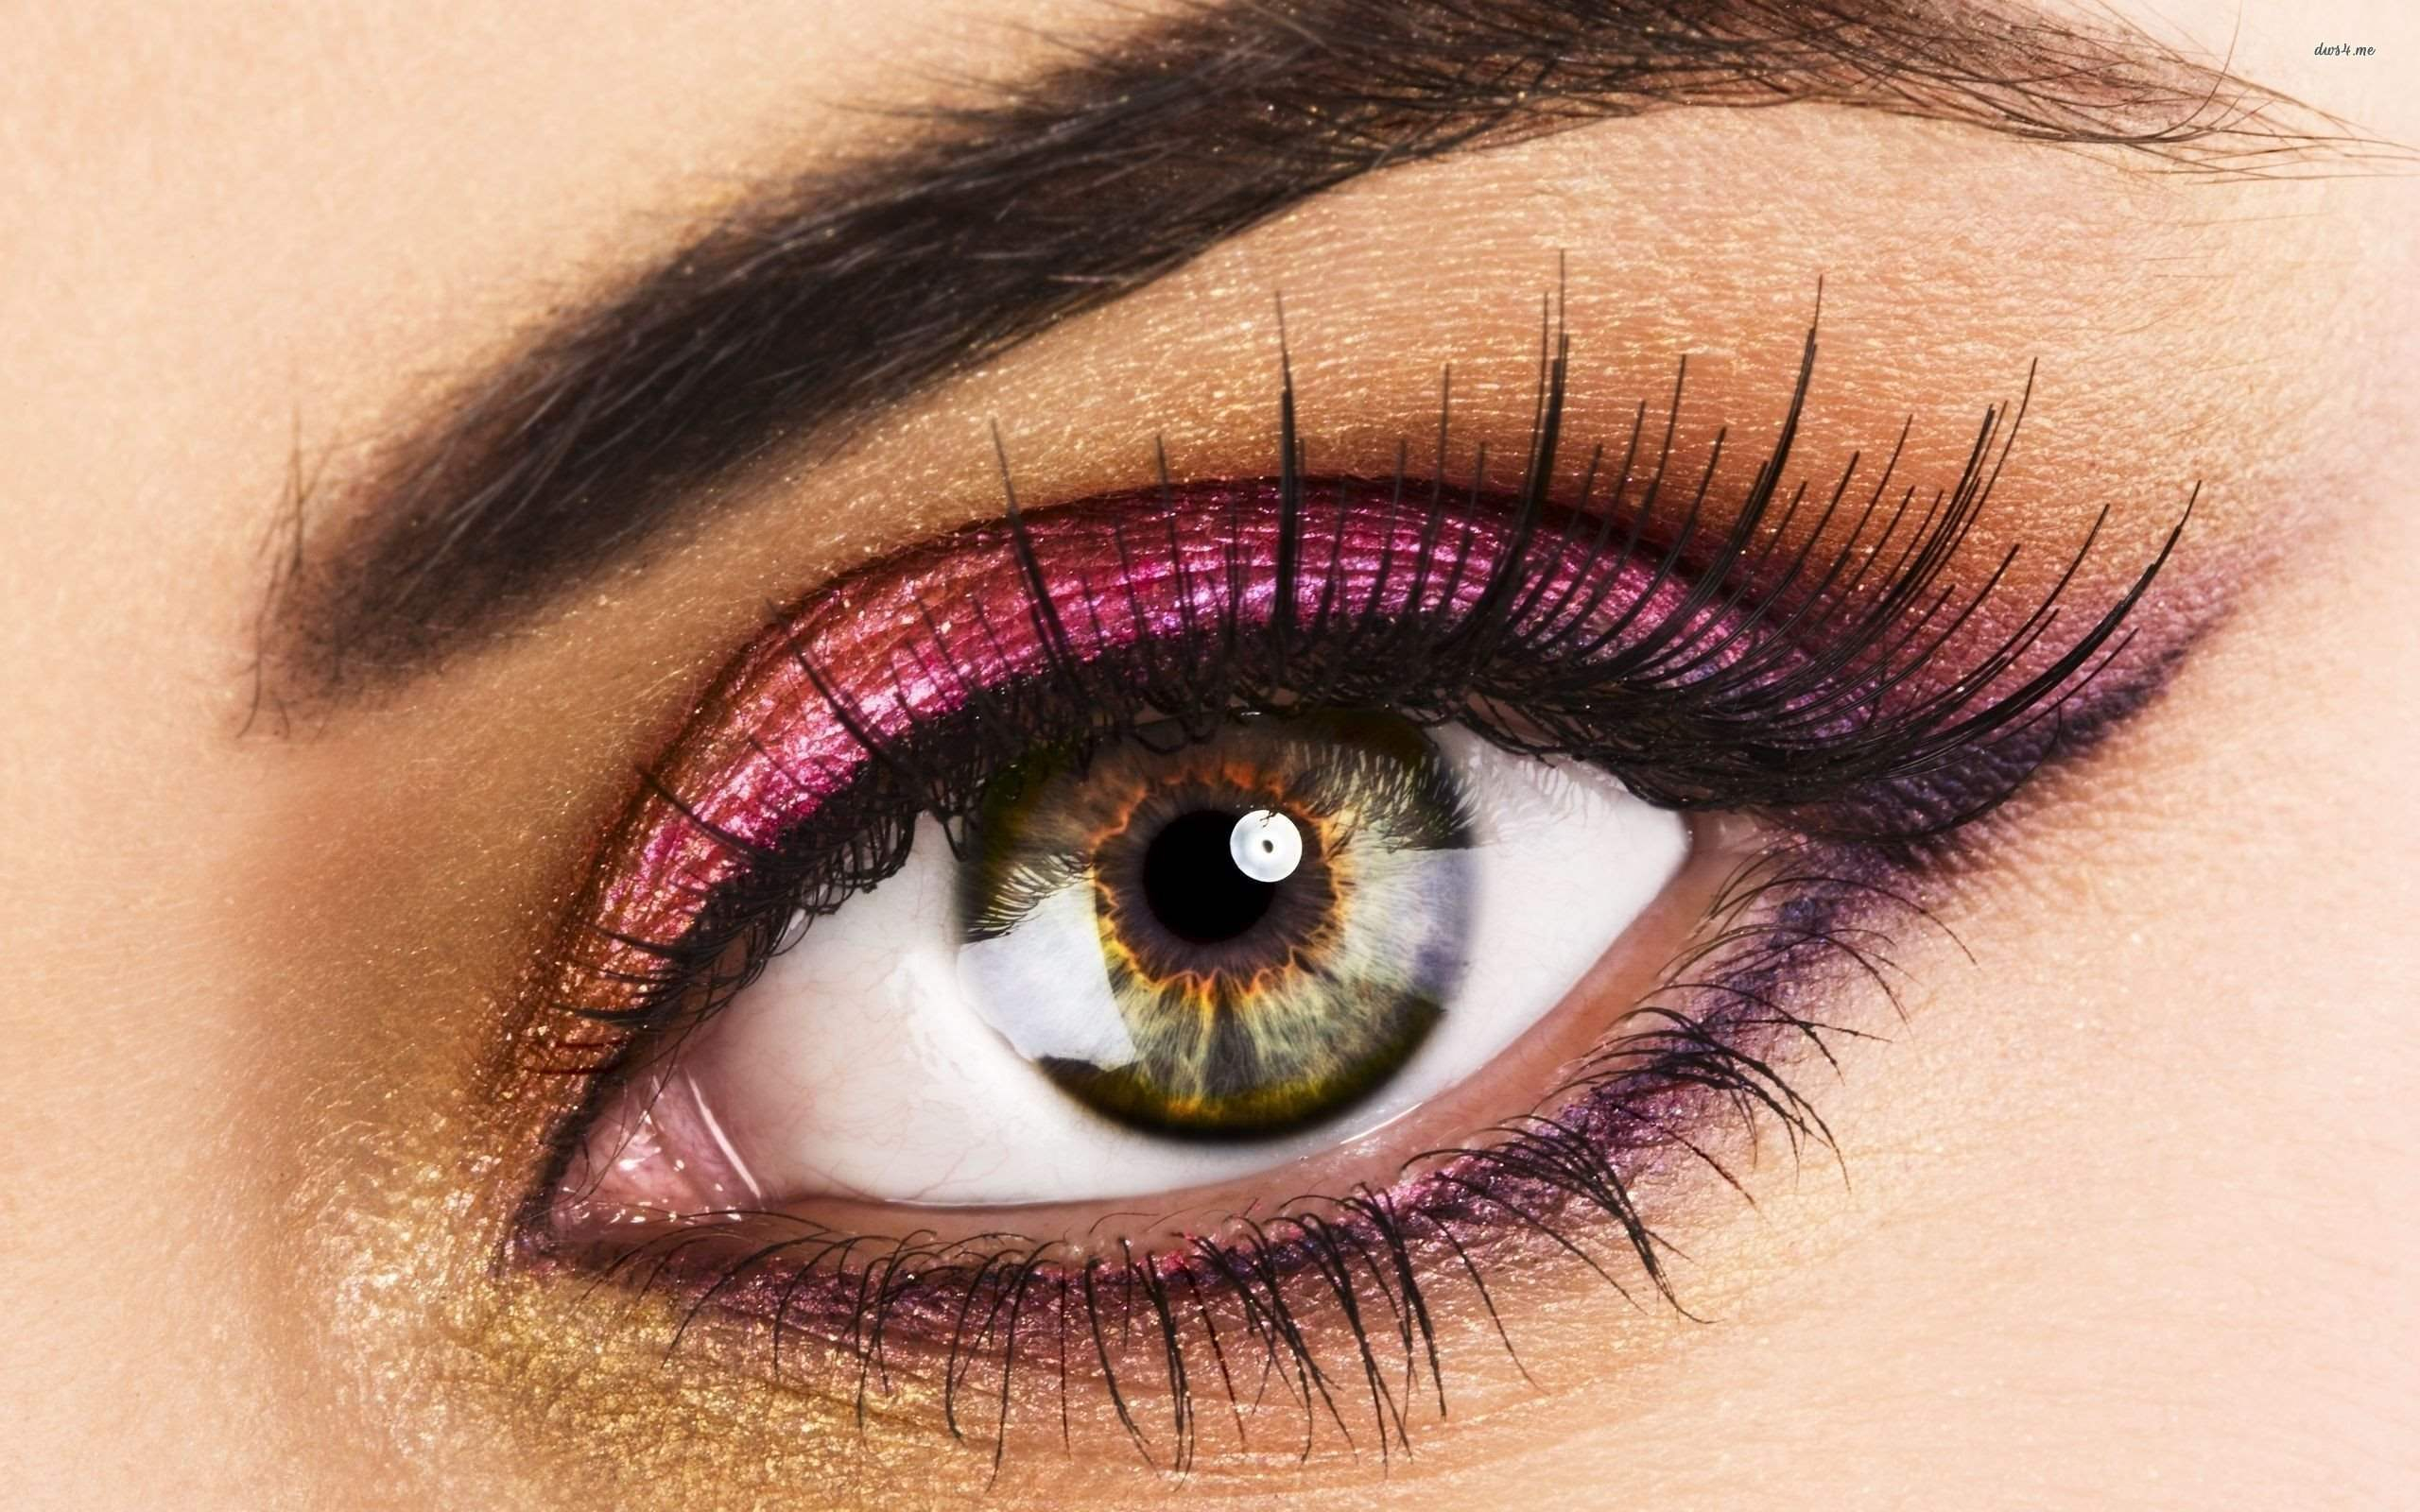 Design Of Eyes Makeup Creative Eye Makeup Looks And Design Ideas